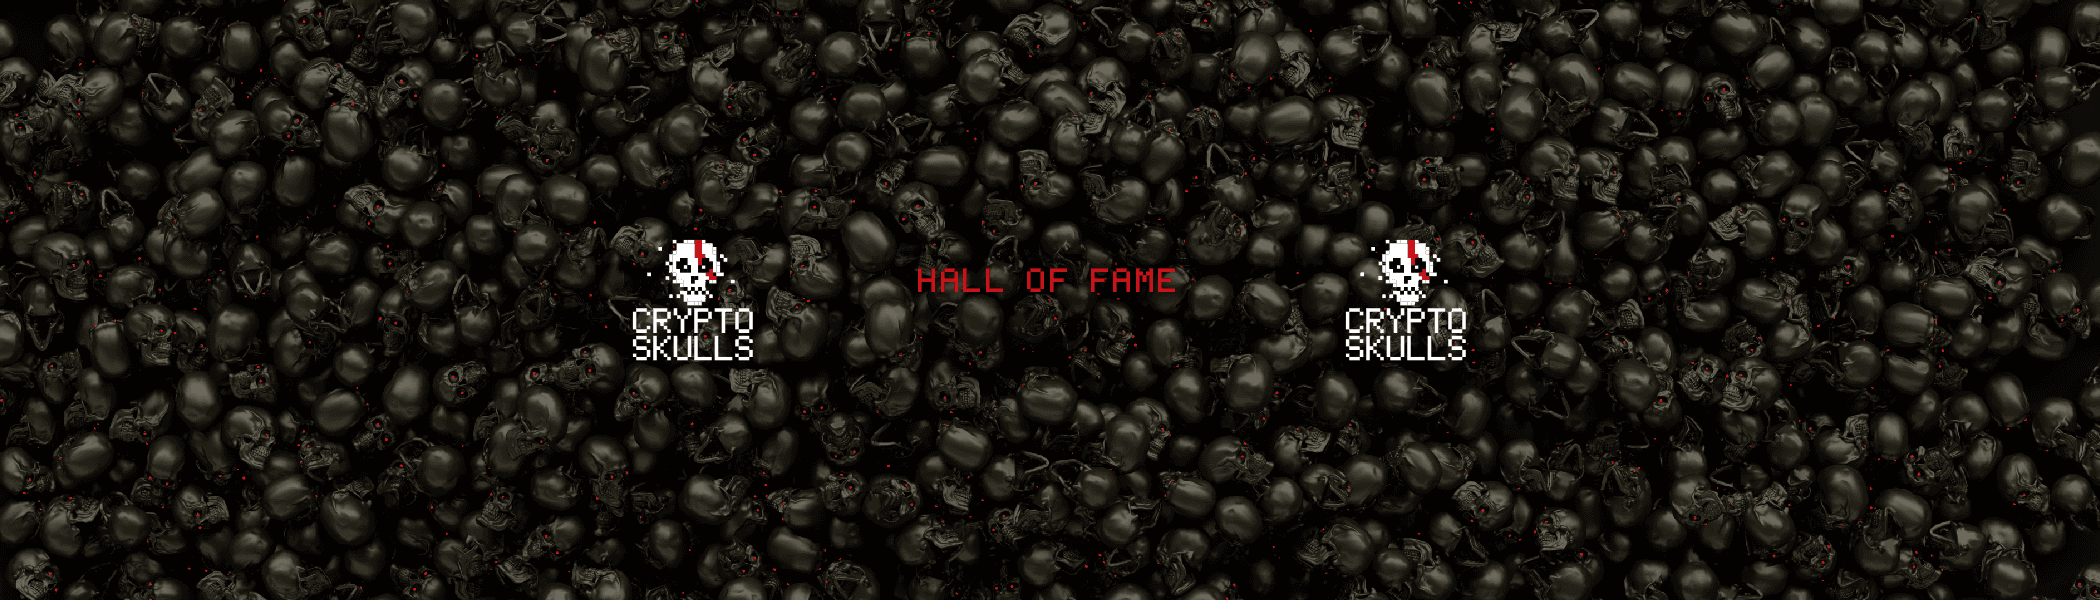 CryptoSkulls Hall of Fame